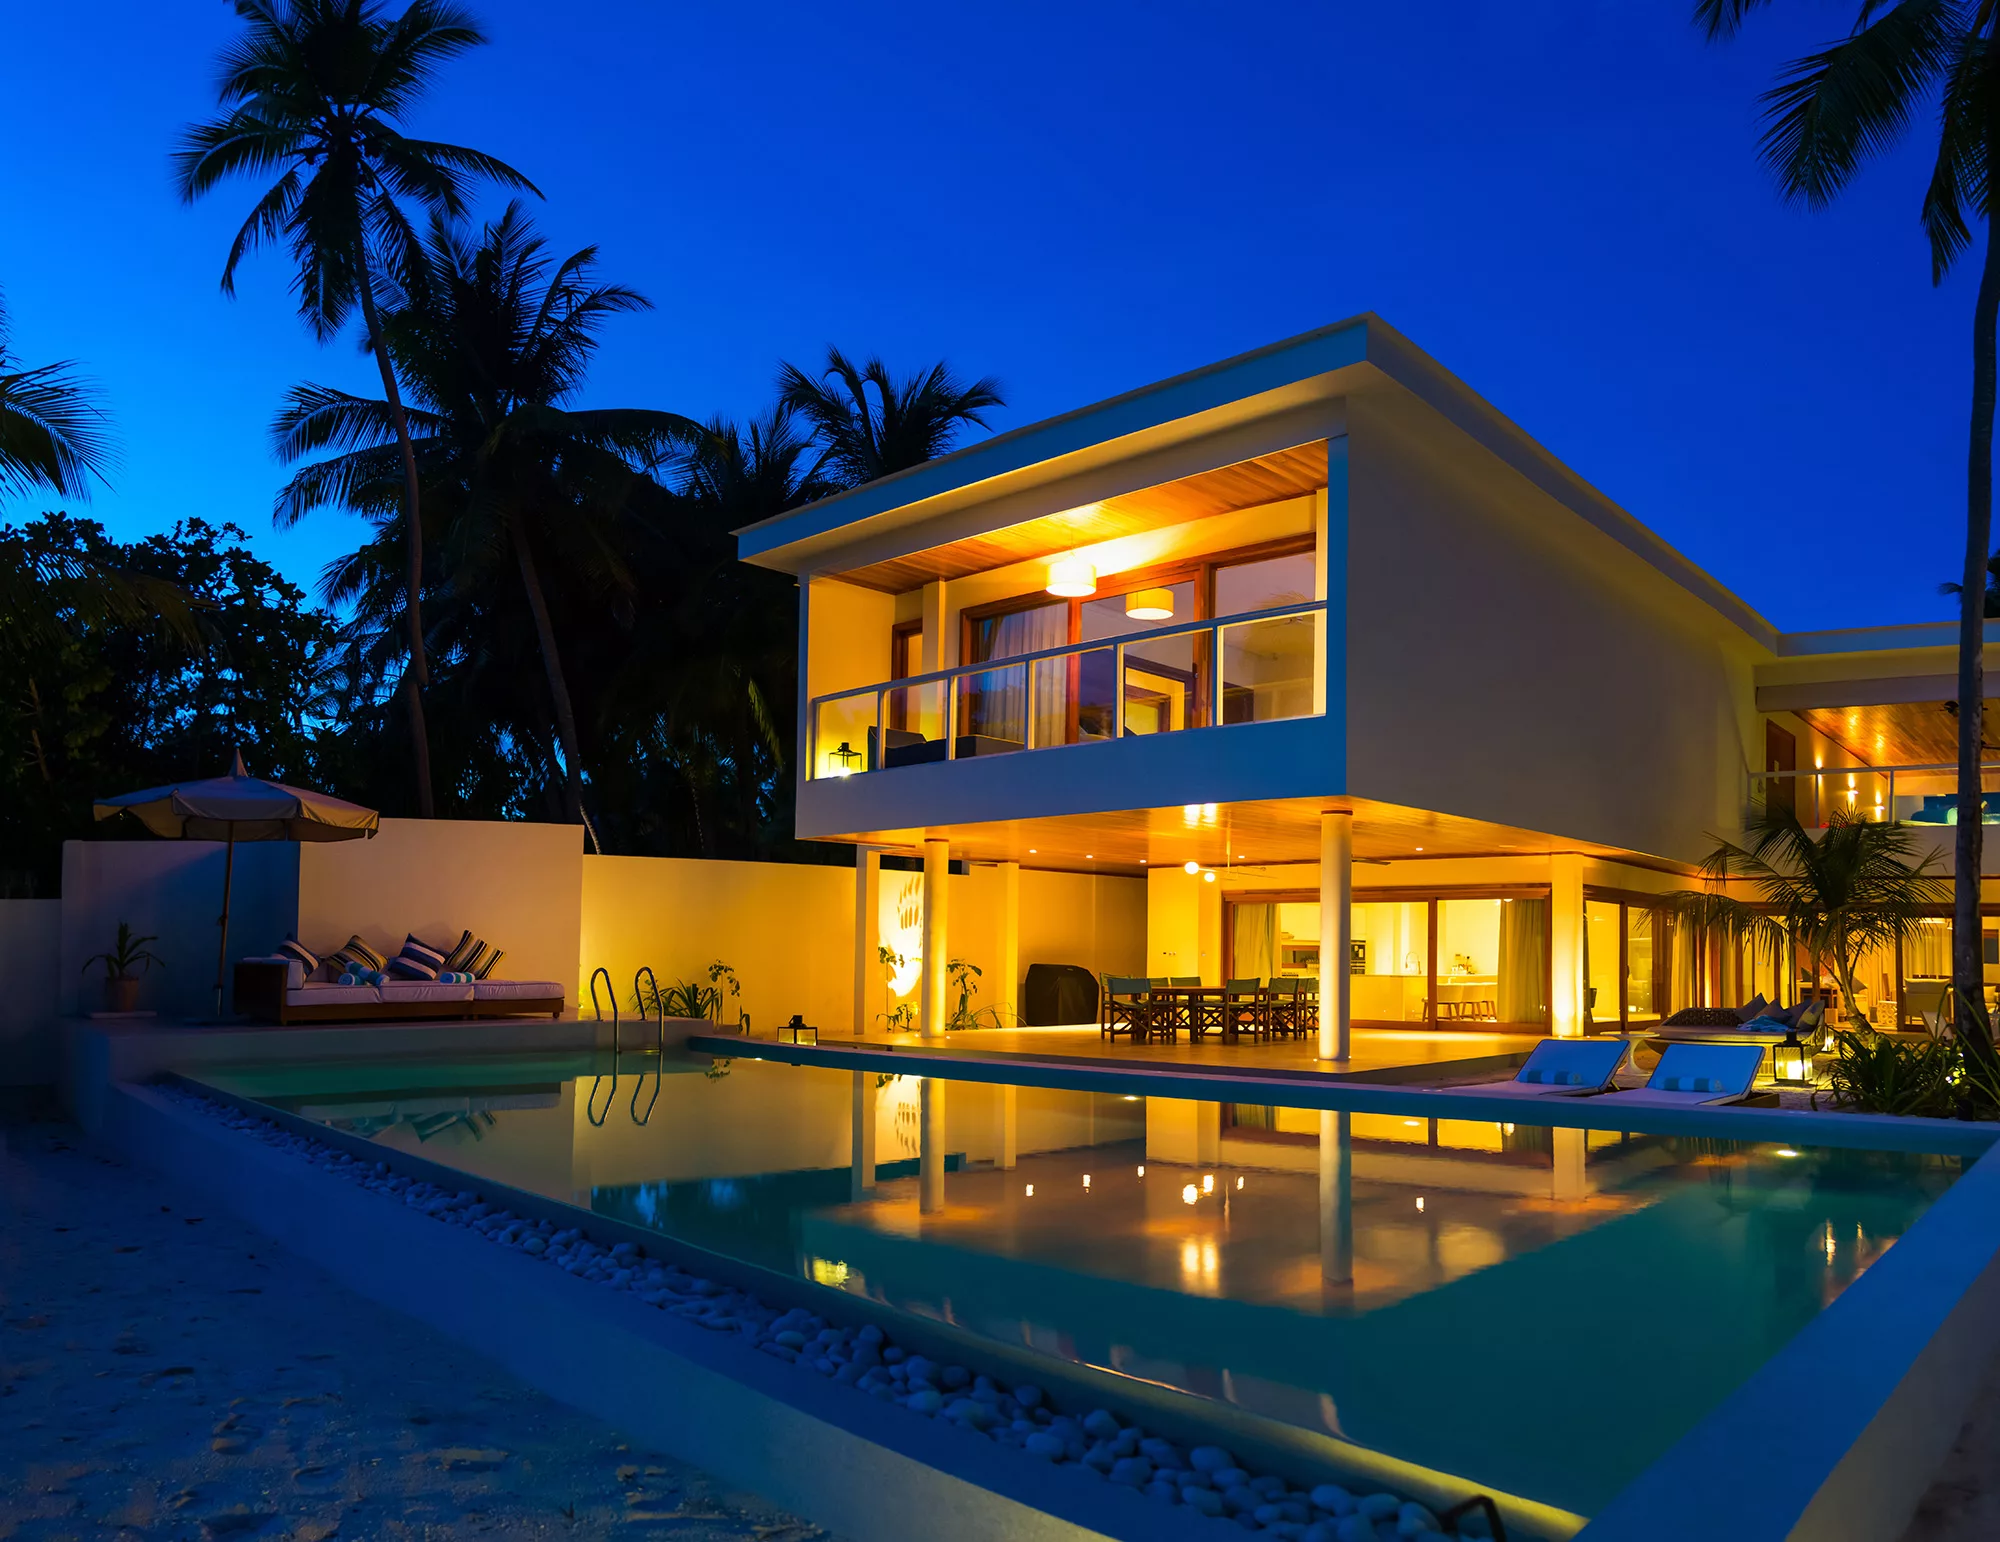 Amilla Fushi Resort Great Beach Villa Residences Finolhus